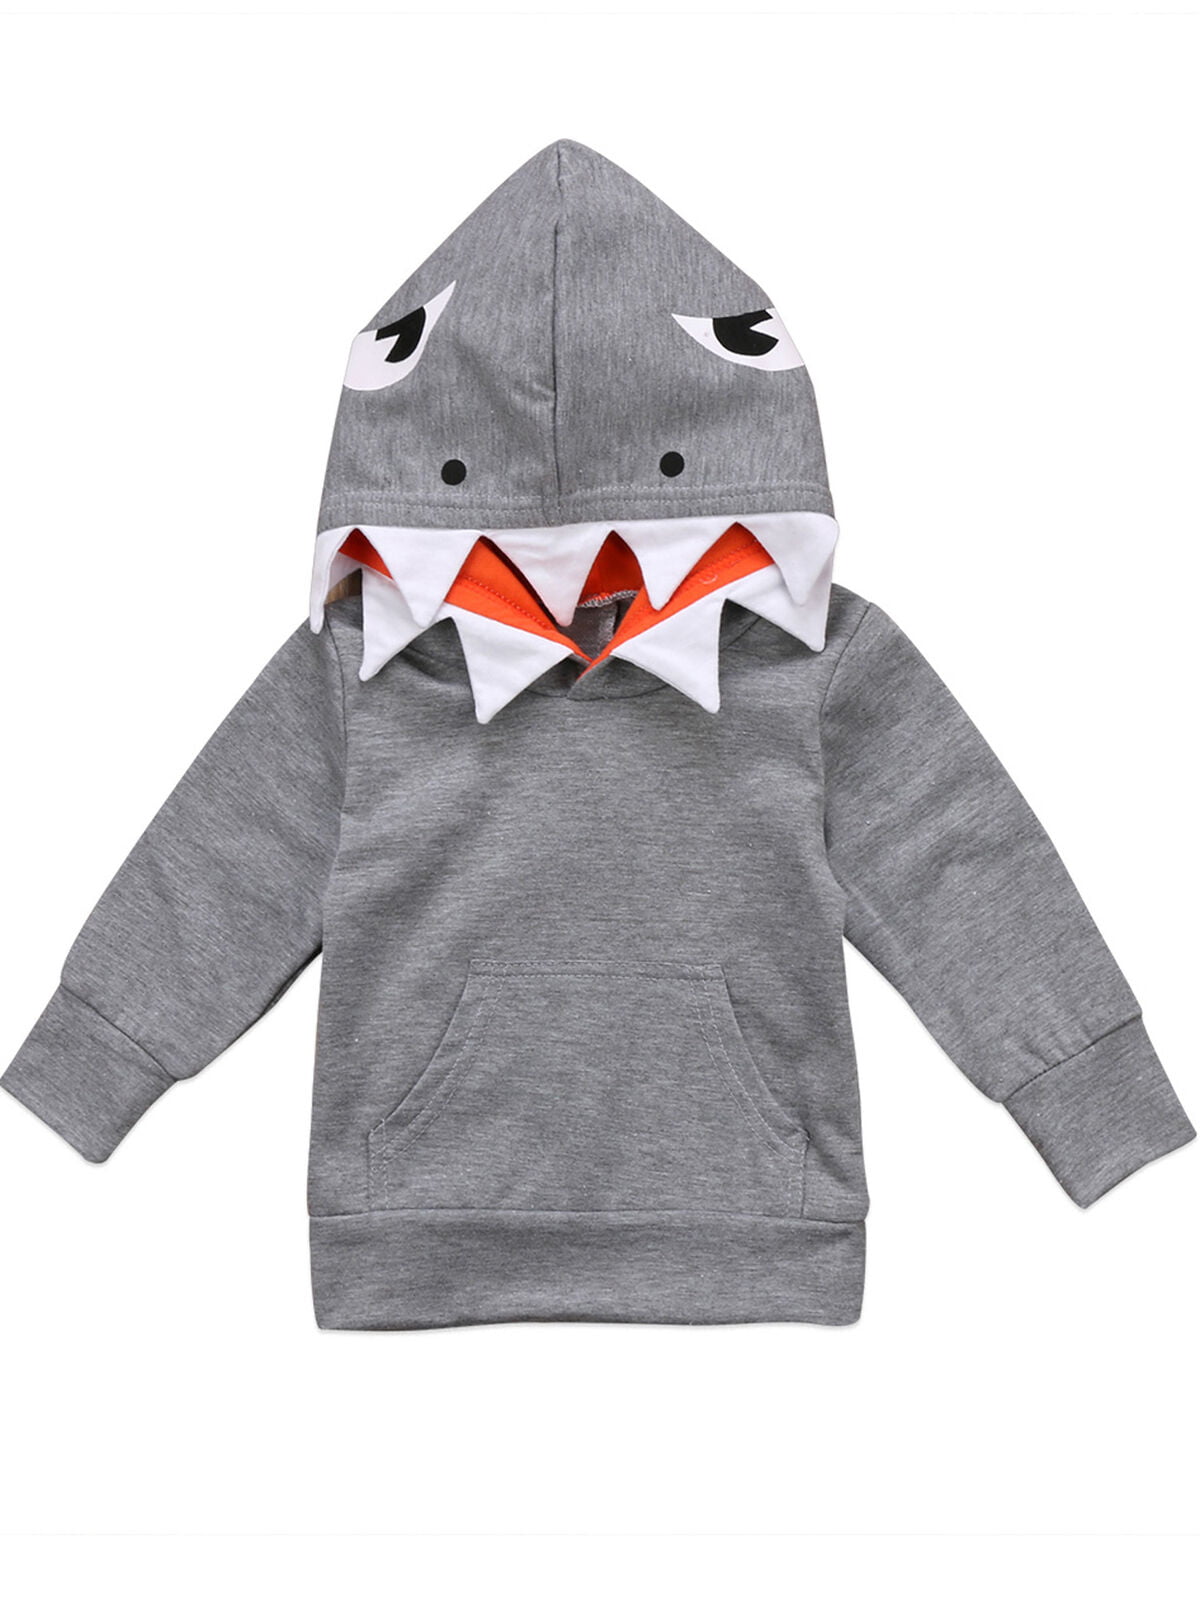 Unisex Baby Autumn Winter Shark Hooded Sweatshirt Infant Boys Girls Hoodies with Kangaroo Muff Pockets& Shark Fin